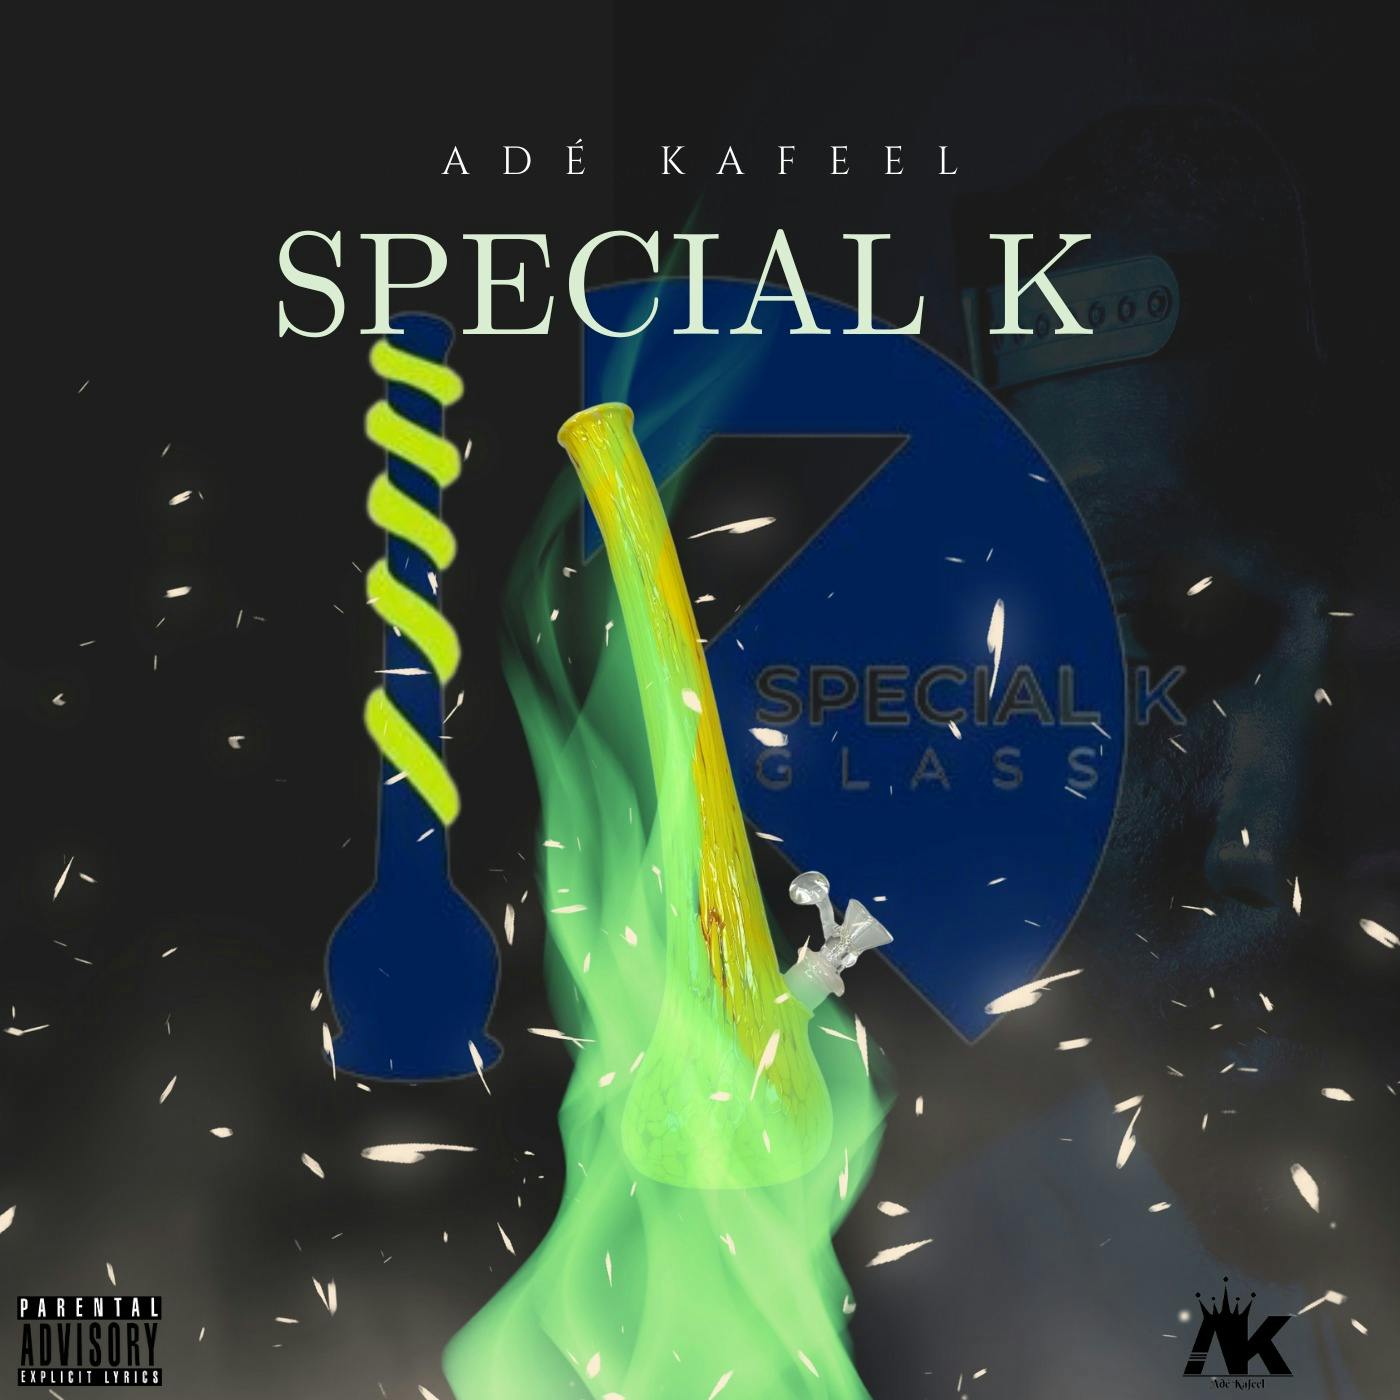 Special K Glass (Promo)